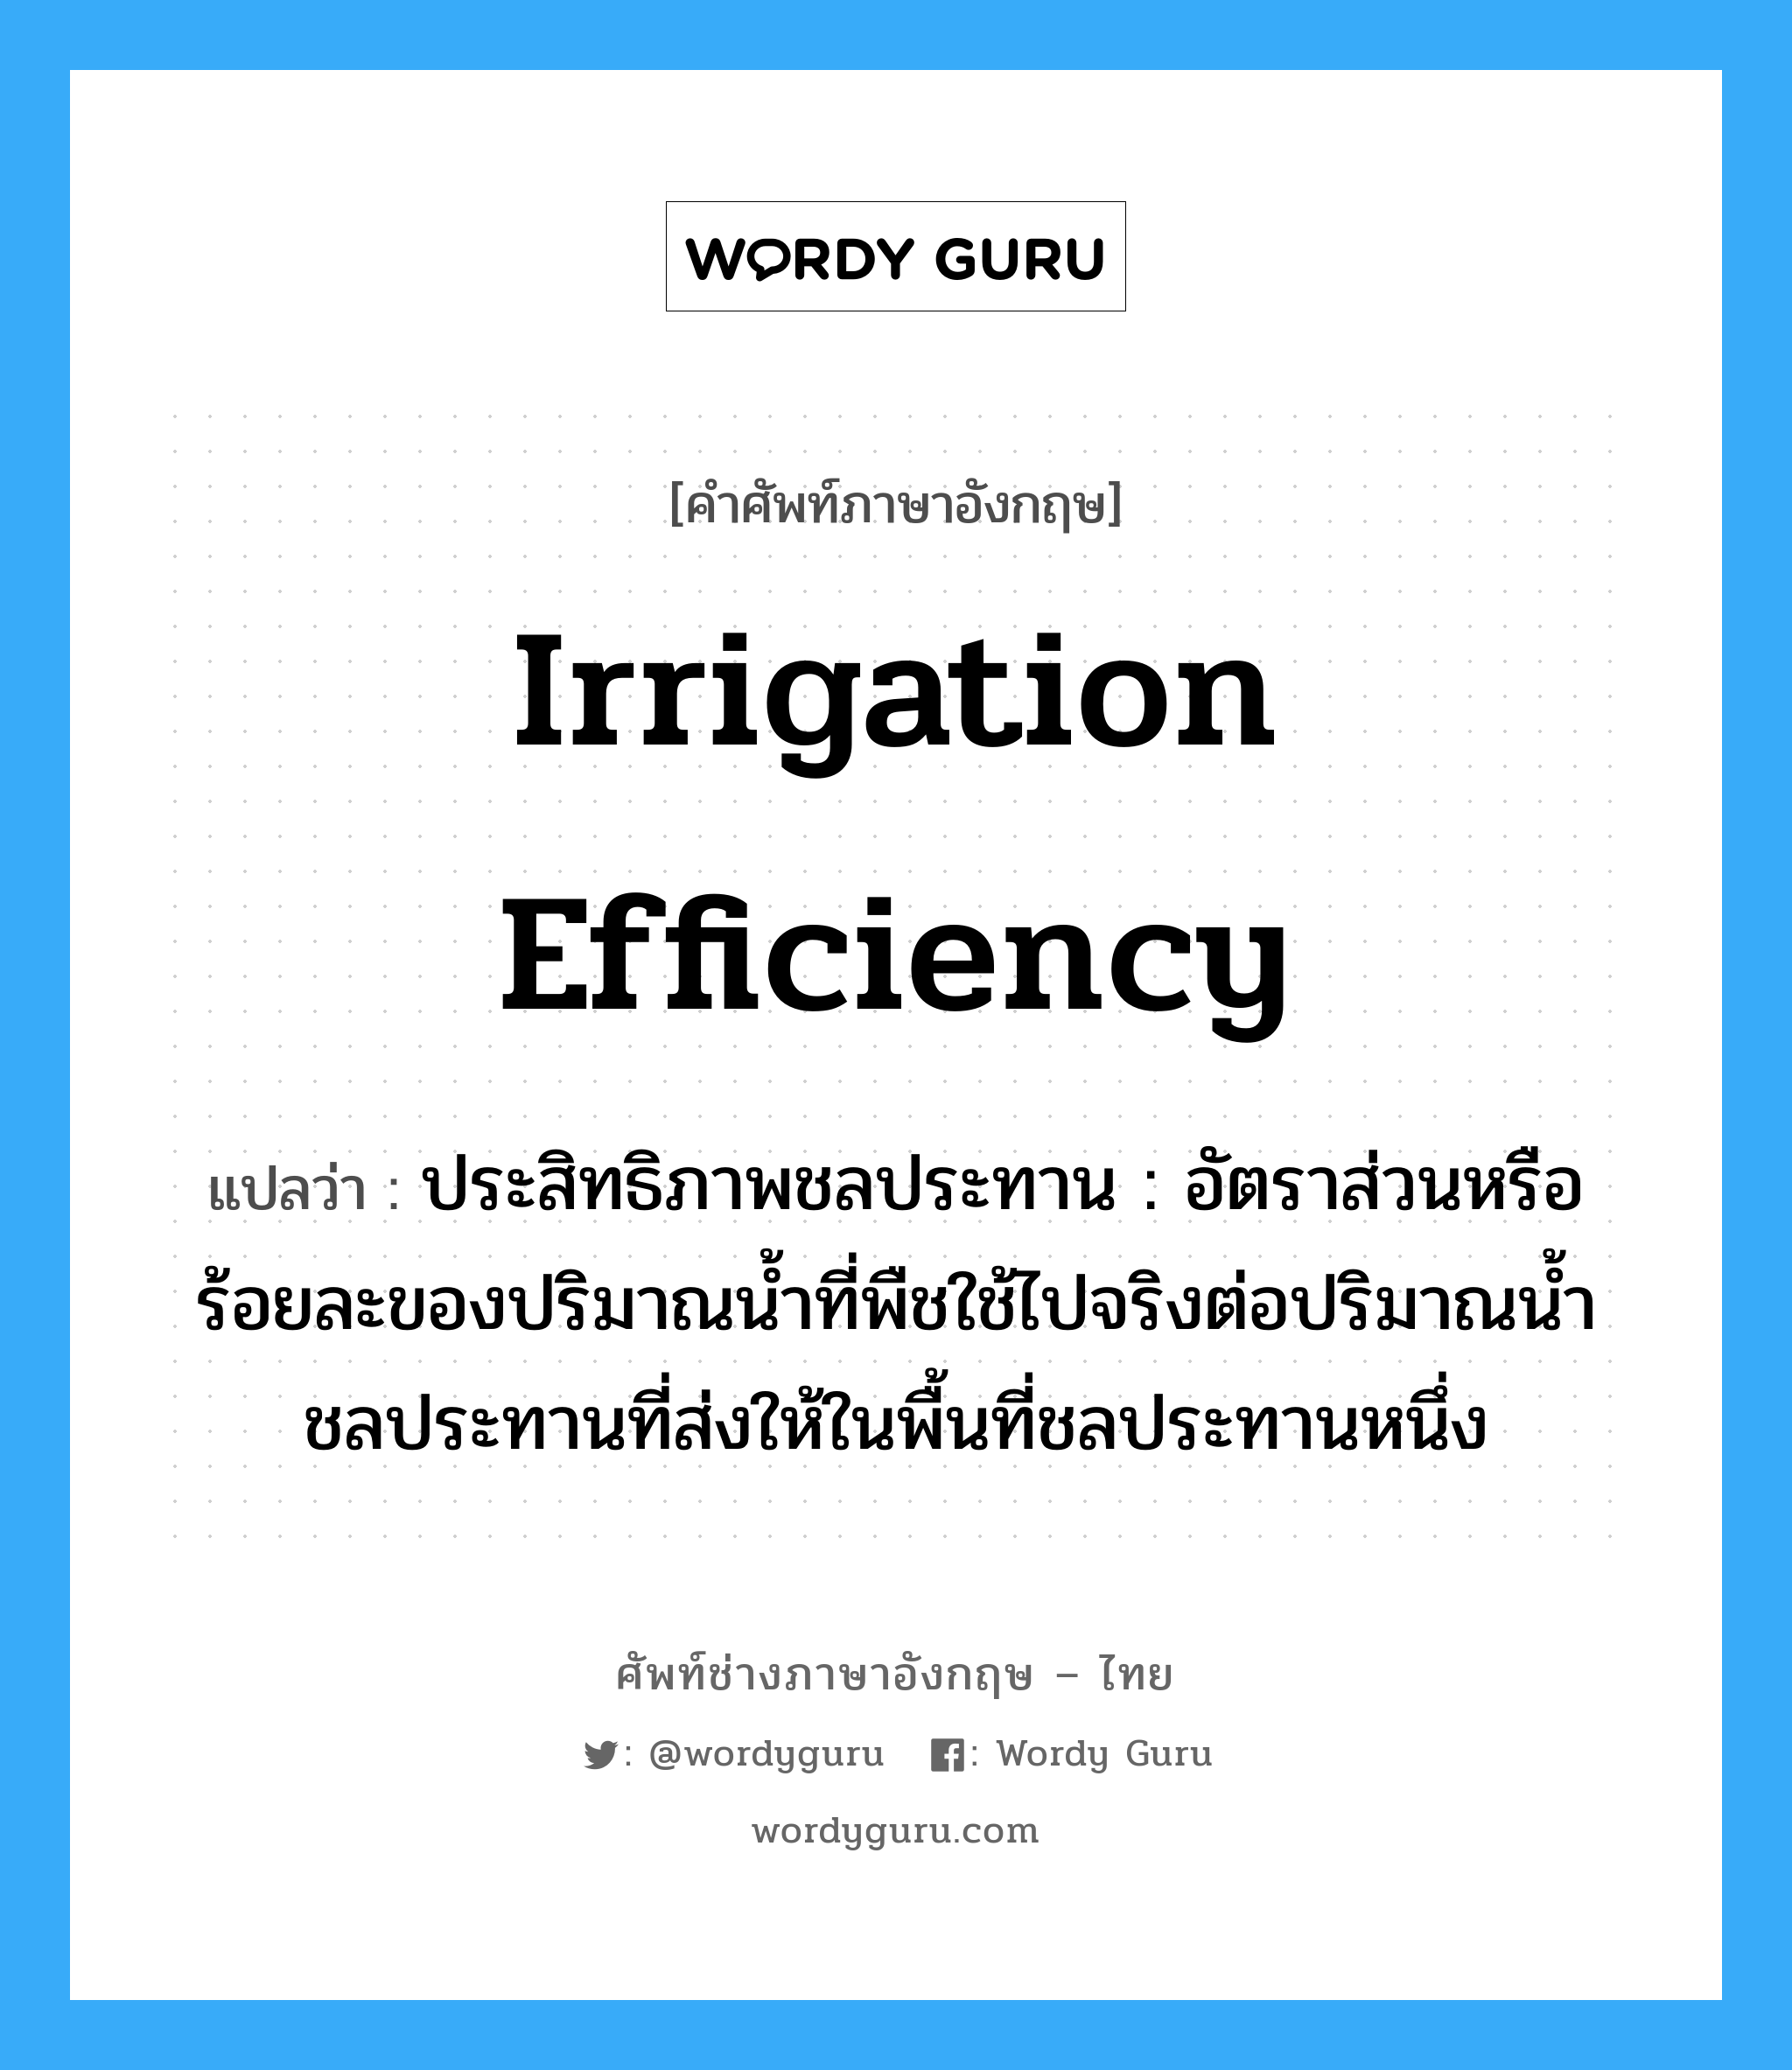 irrigation efficiency แปลว่า?, คำศัพท์ช่างภาษาอังกฤษ - ไทย irrigation efficiency คำศัพท์ภาษาอังกฤษ irrigation efficiency แปลว่า ประสิทธิภาพชลประทาน : อัตราส่วนหรือร้อยละของปริมาณน้ำที่พืชใช้ไปจริงต่อปริมาณน้ำ ชลประทานที่ส่งให้ในพื้นที่ชลประทานหนึ่ง